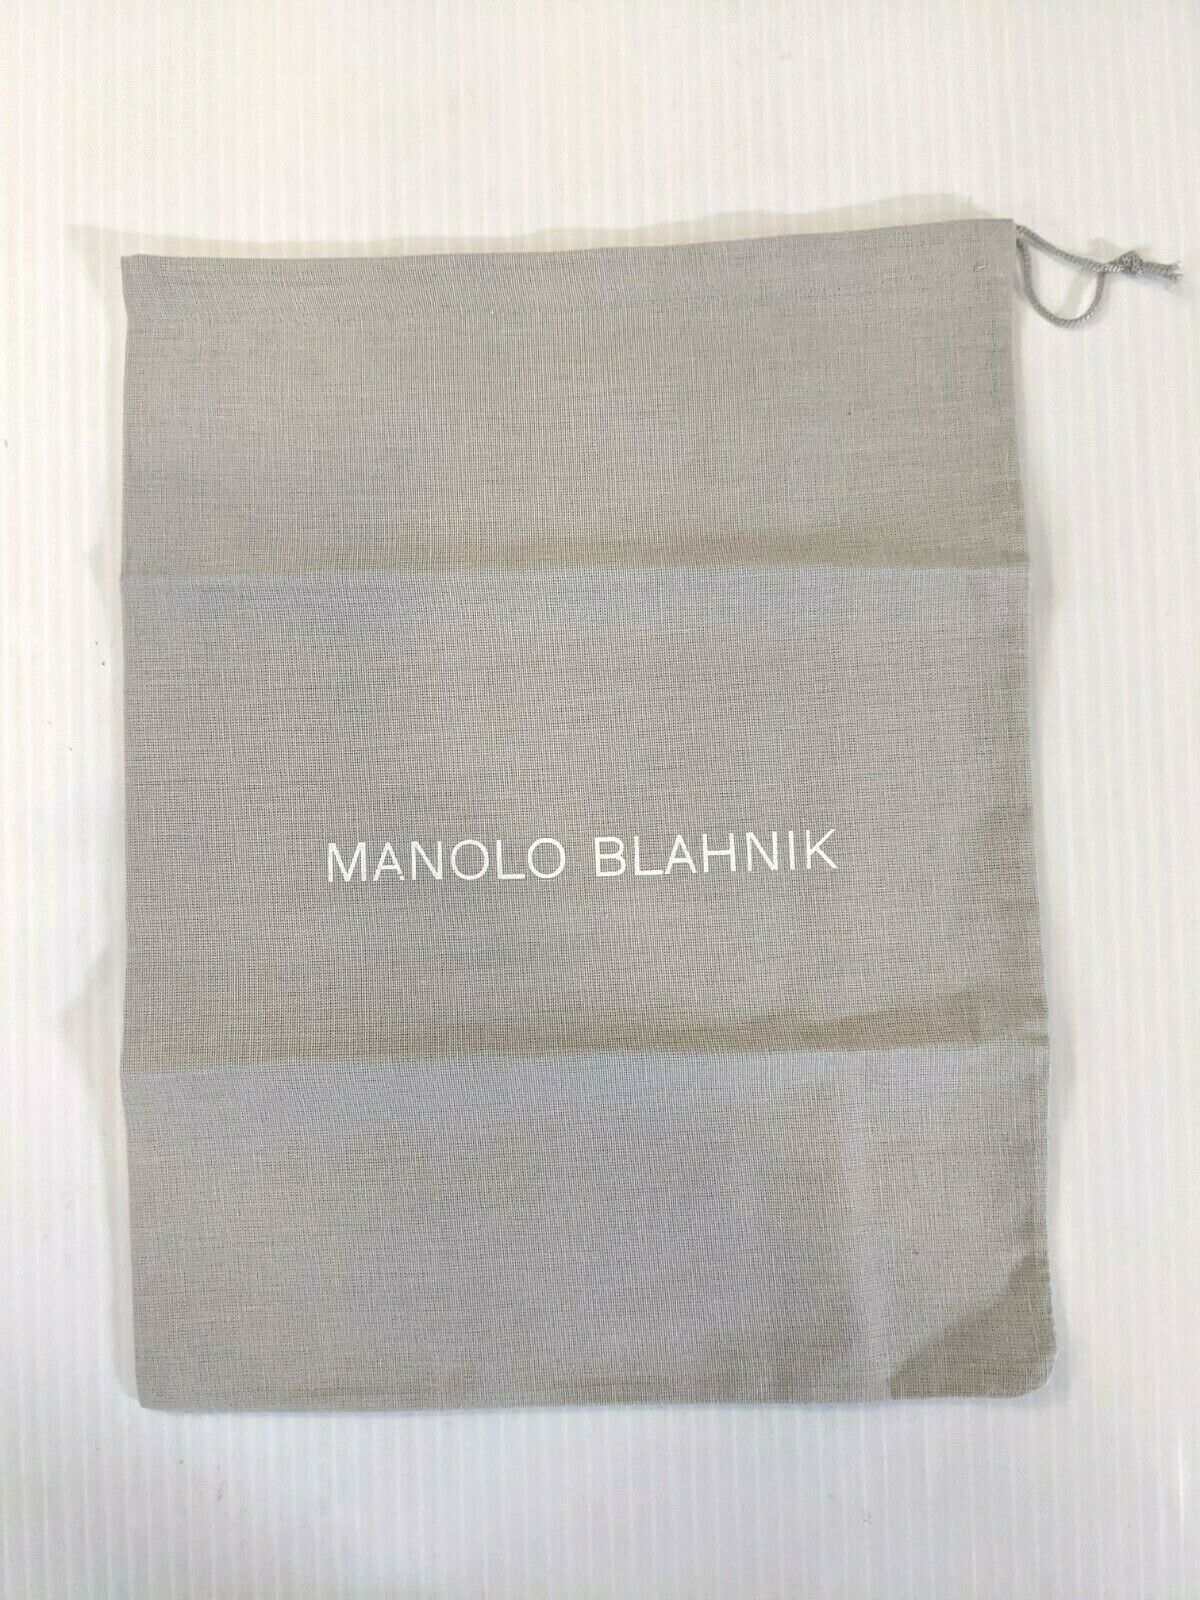 New Authentic Manolo Blahnik Drawstring Dust Cover Bag Shoes 13.5" X 10.5"